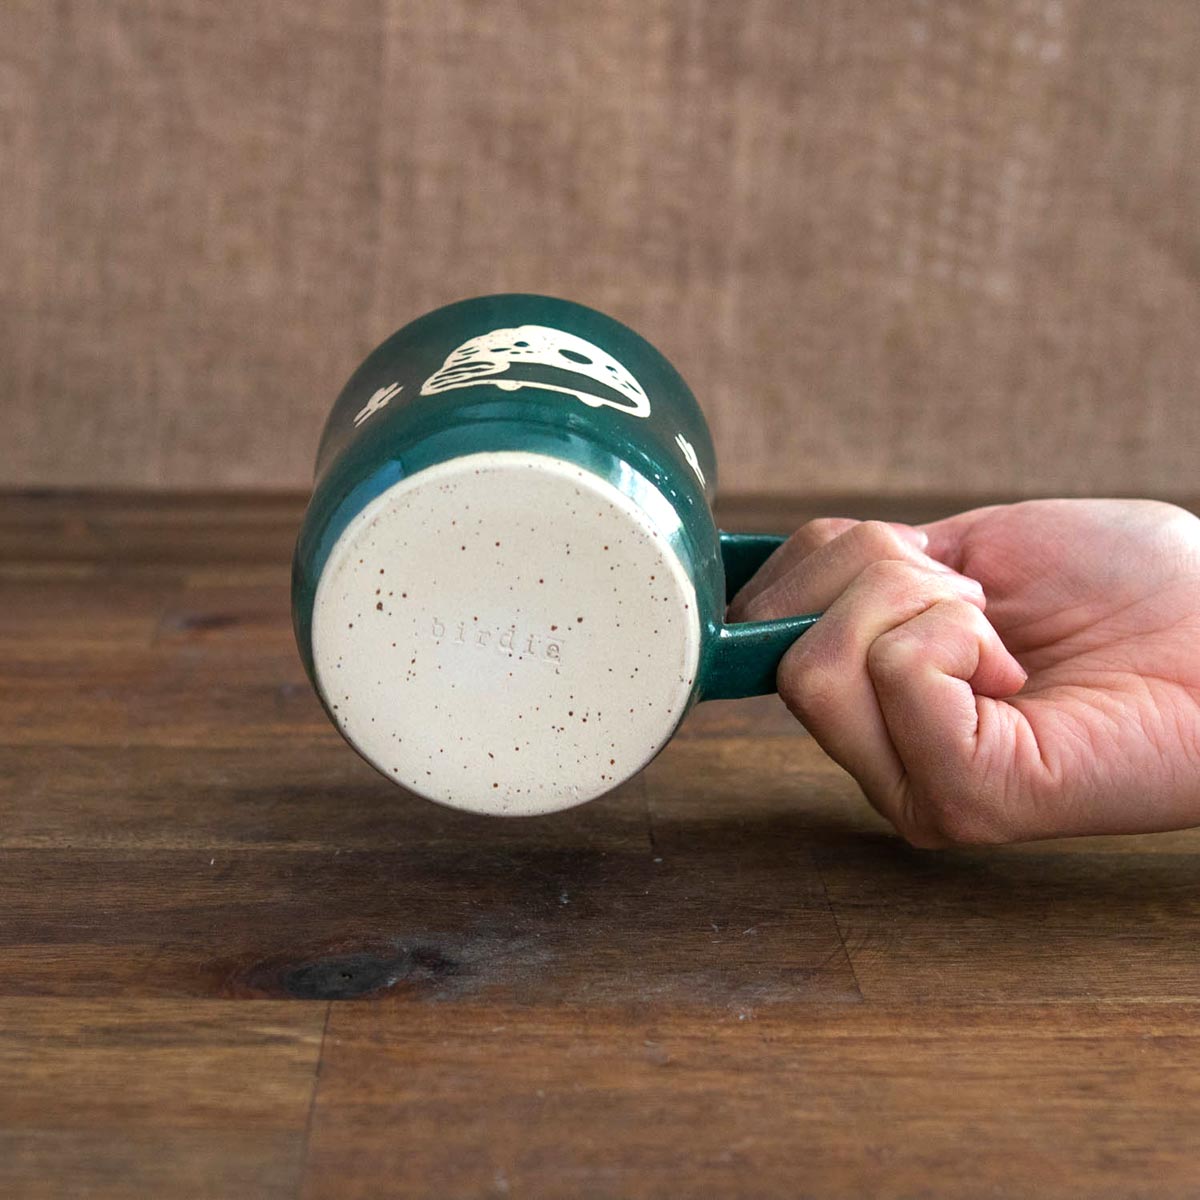 Green budgie mug - 300 ml (10 oz)